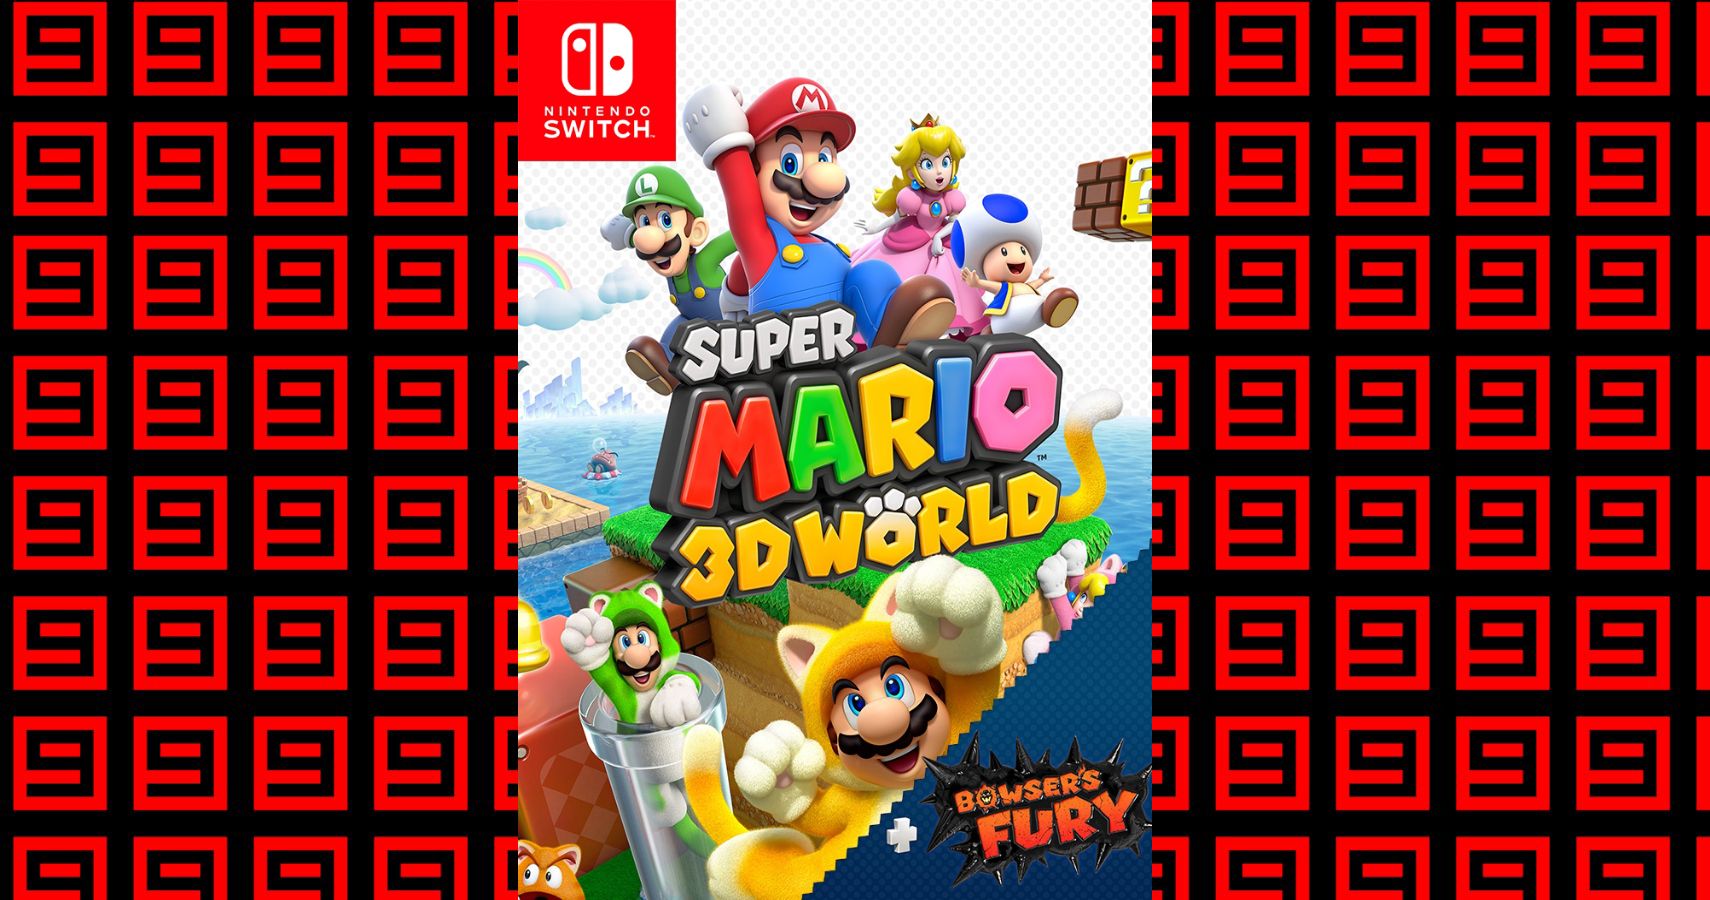 Target Super Mario 3D World + Bowser's Fury Bonus Revealed